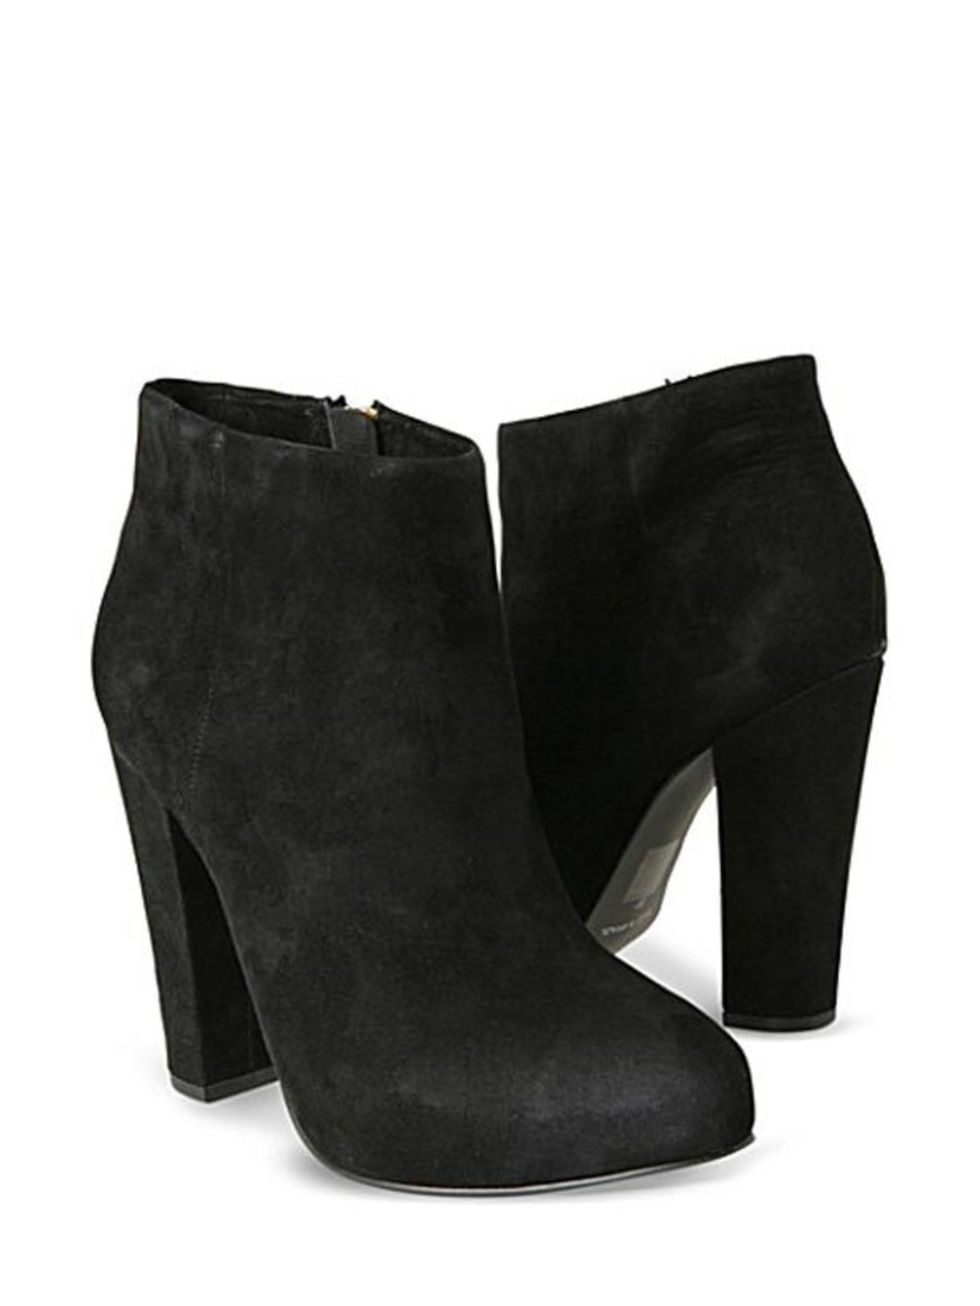 <p>Carvela black suede ankle boots, £160, at <a href="http://www.selfridges.com/en/Accessories/Smart-ankle-boots-black_521-10004-1397600209/">Selfridges </a></p>